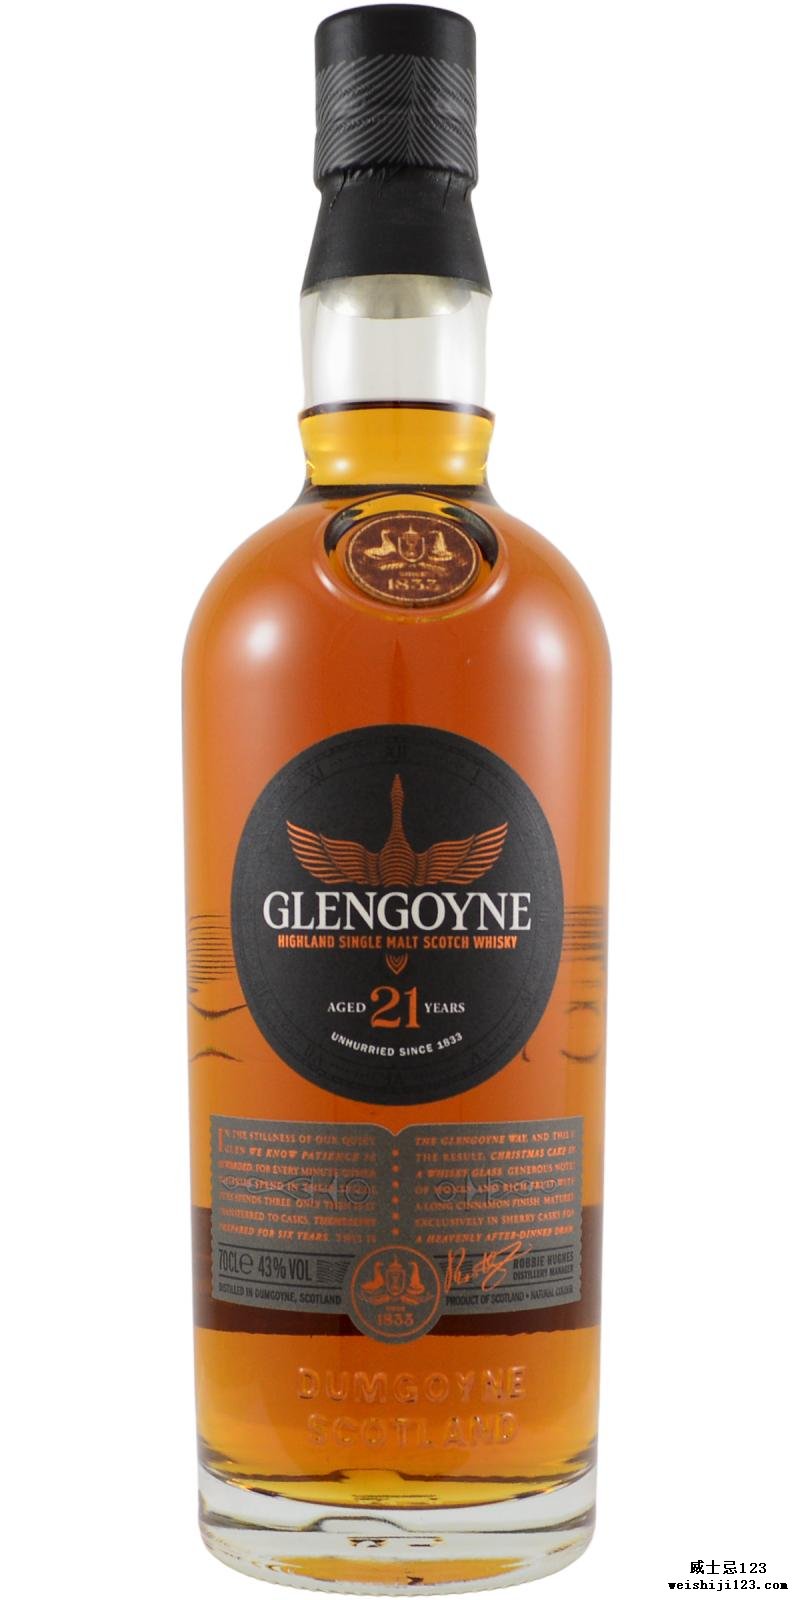 Glengoyne 21-year-old